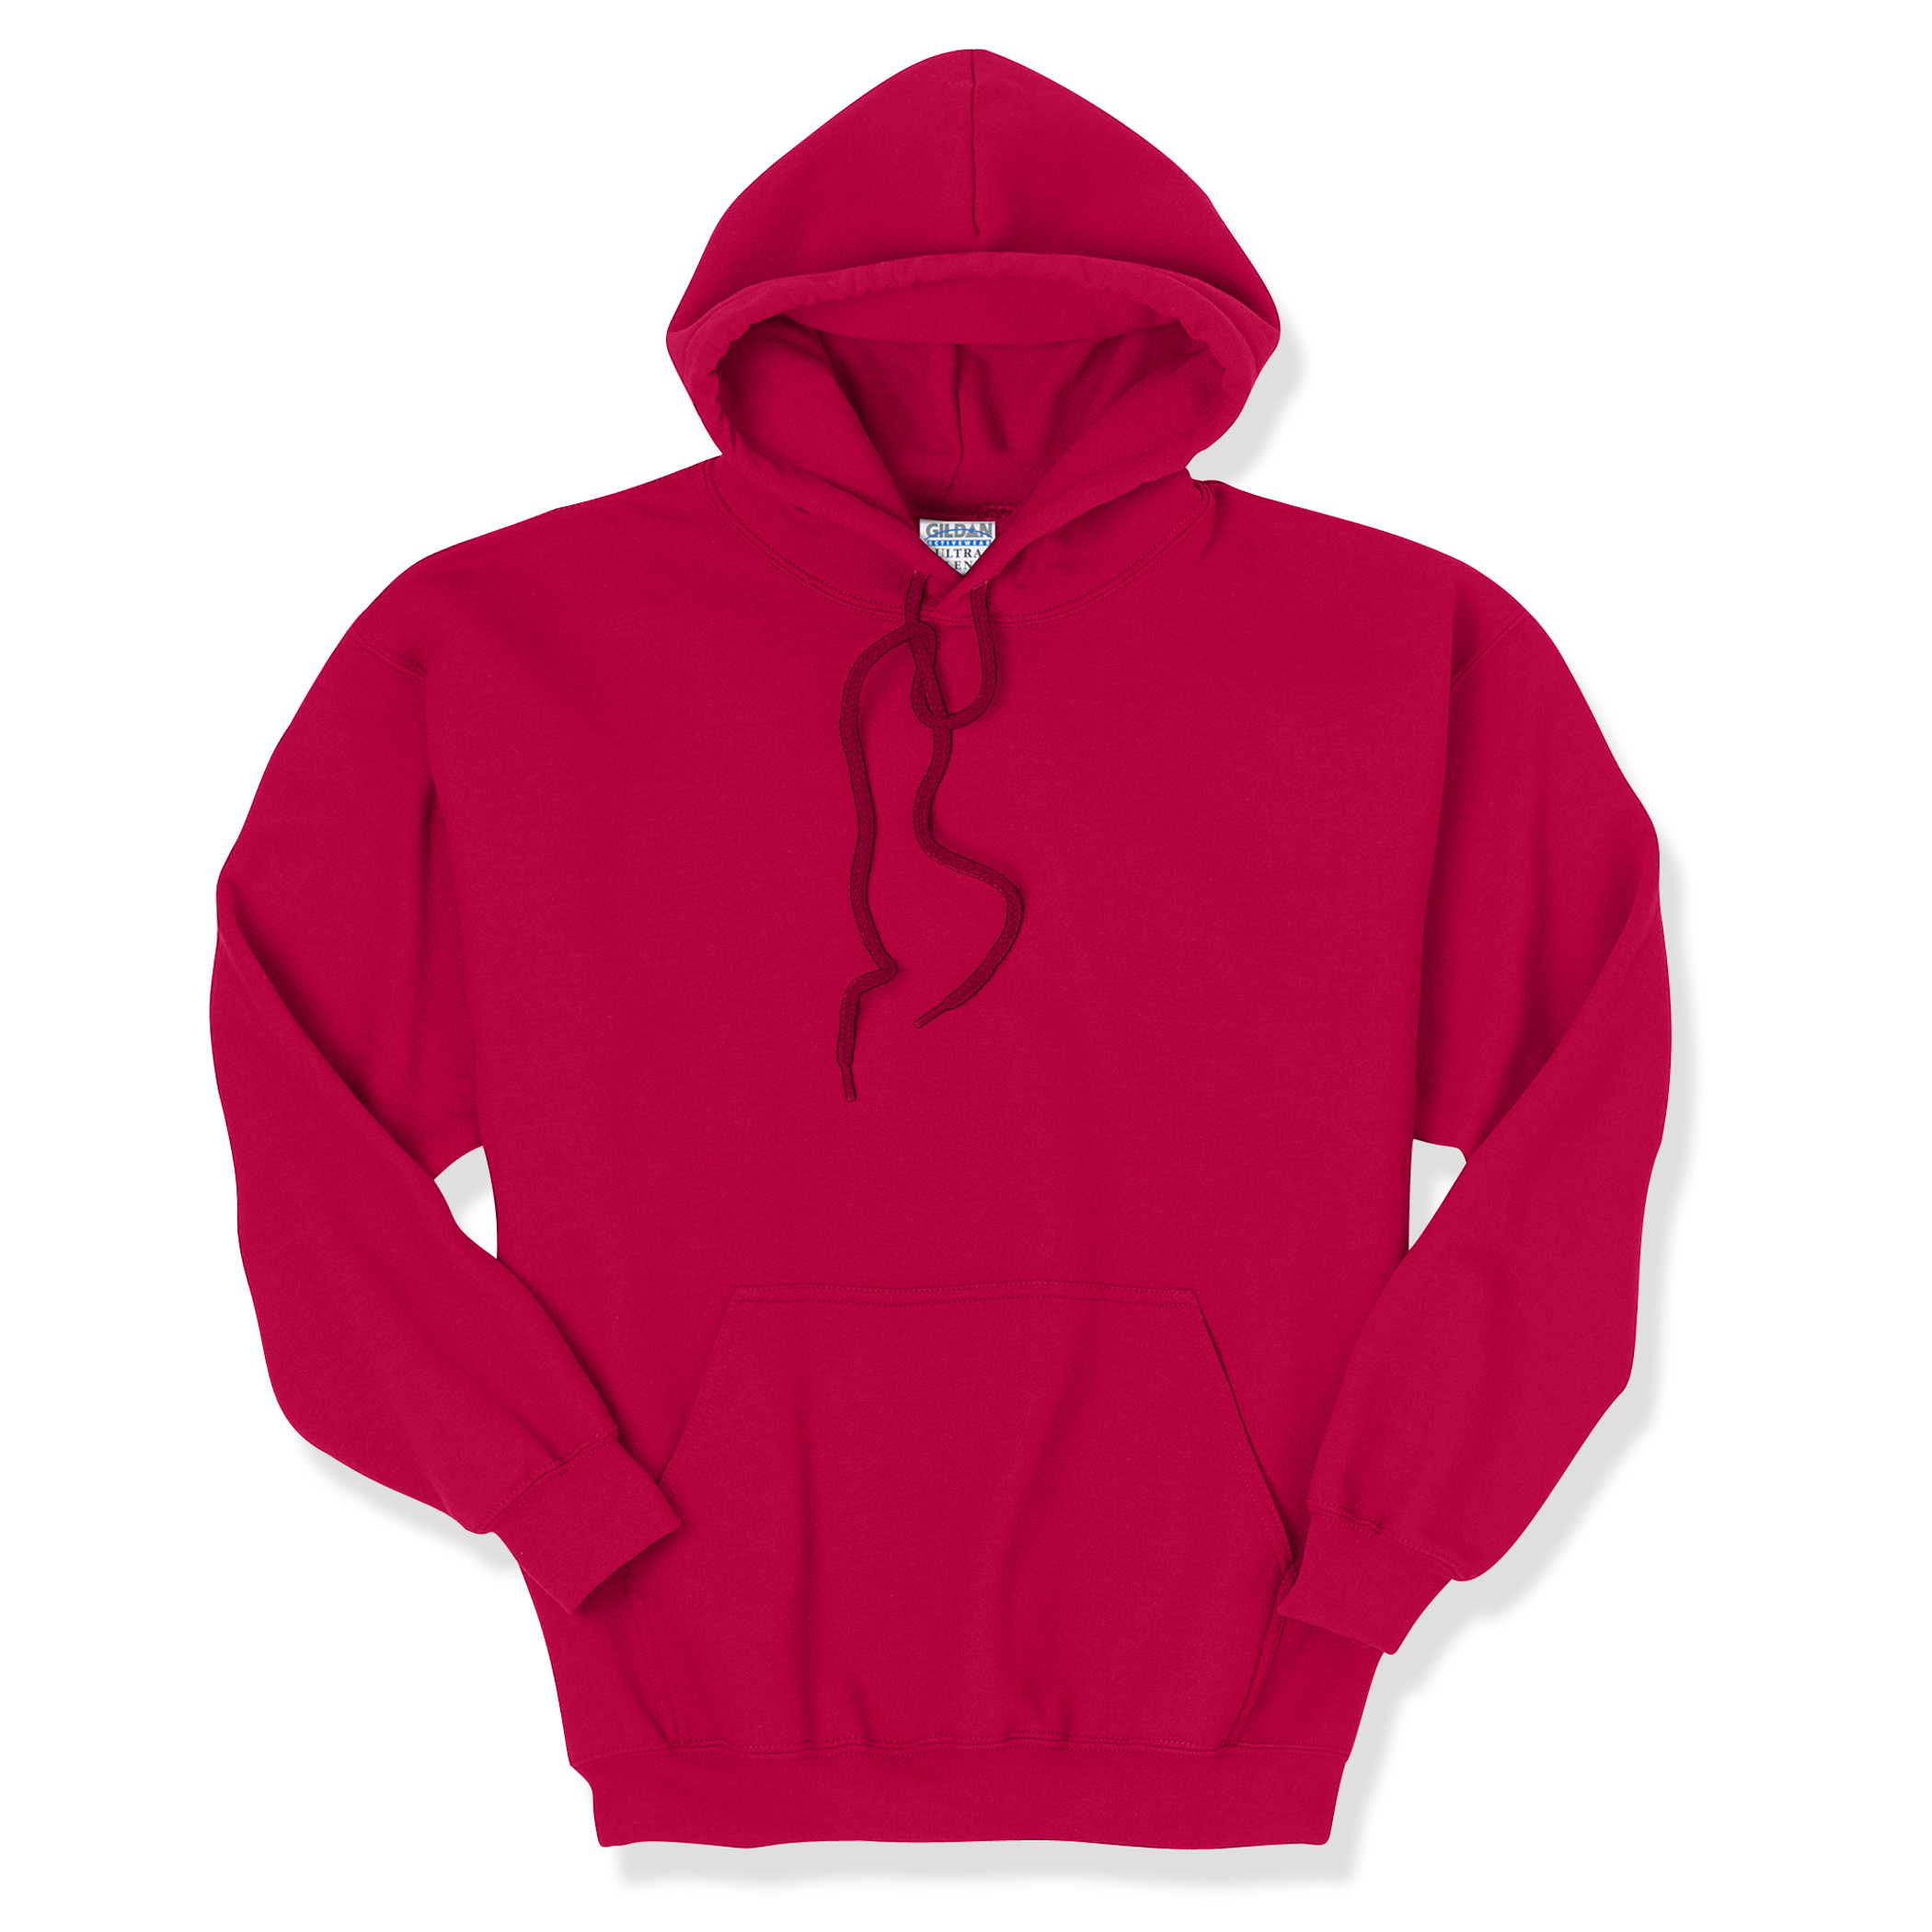 Gildan Activewear Recalls Youth Hooded Sweatshirts with Drawstrings for ...